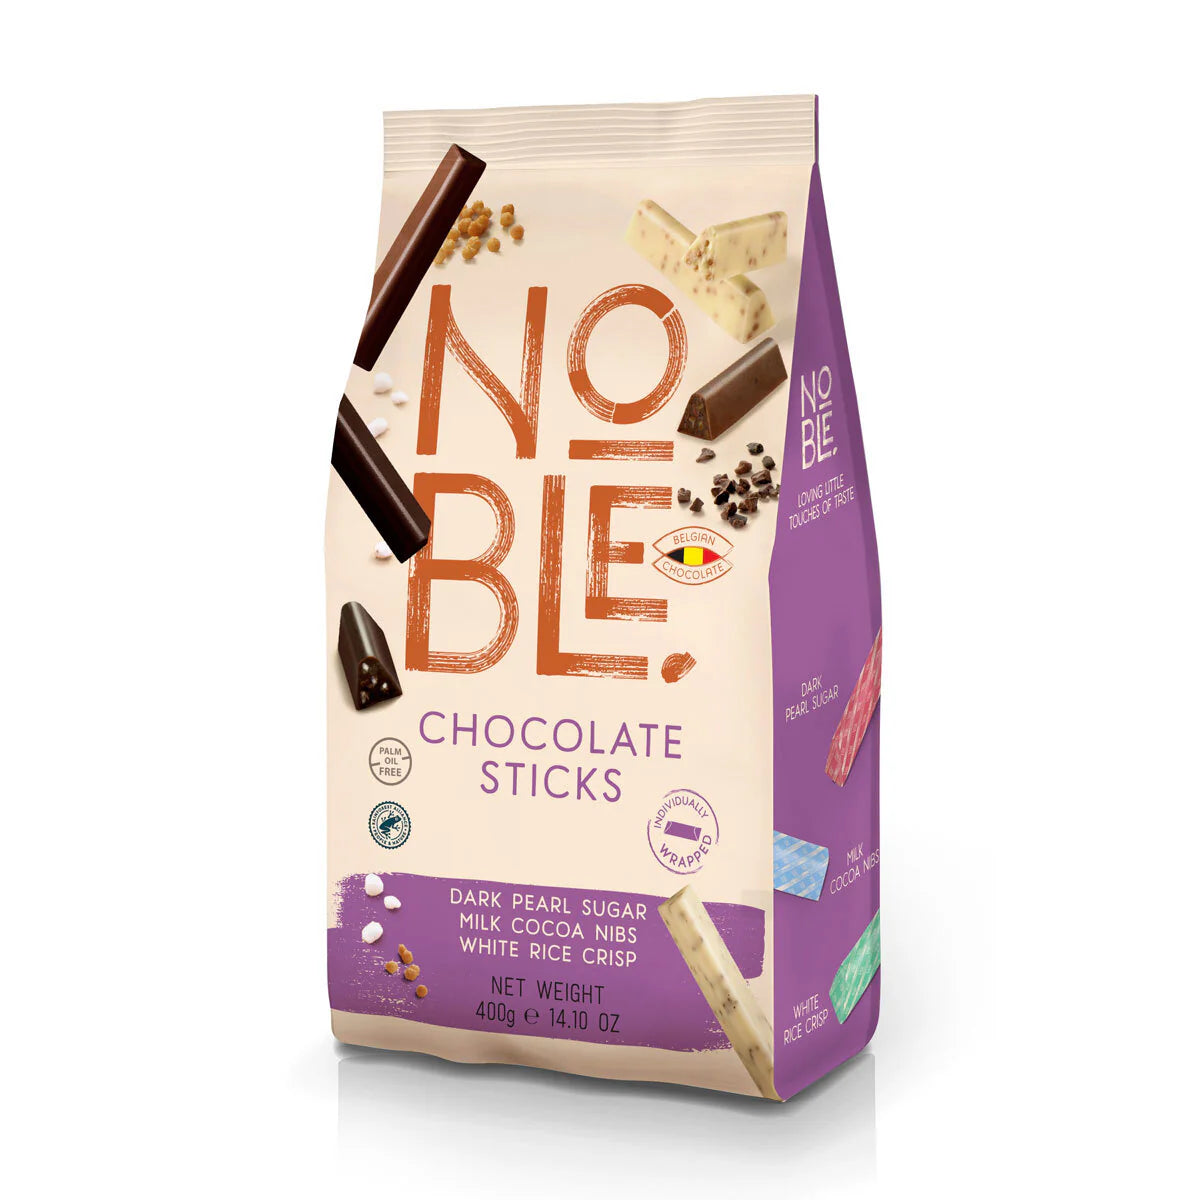 Noble Belgian Chocolate Sticks - 400g